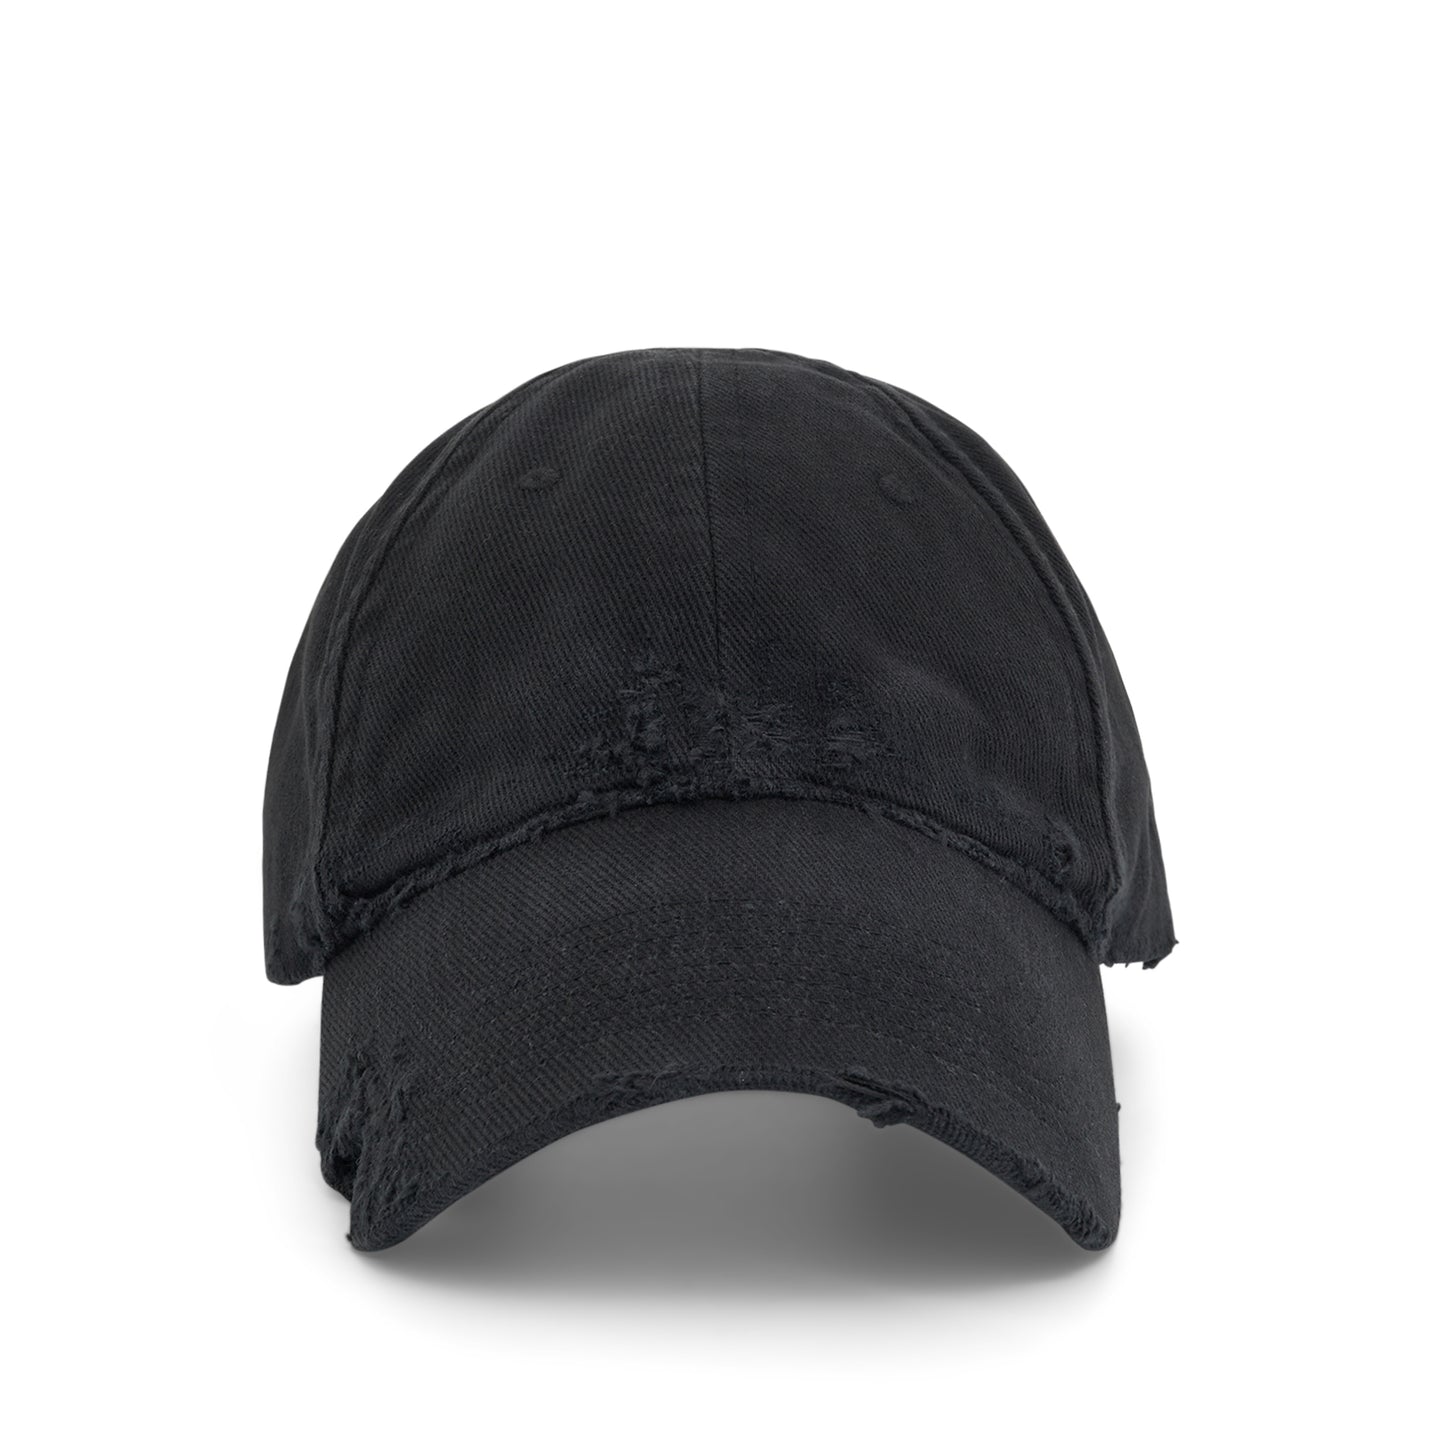 Hat Dog Bite Cap in Washed Black/White